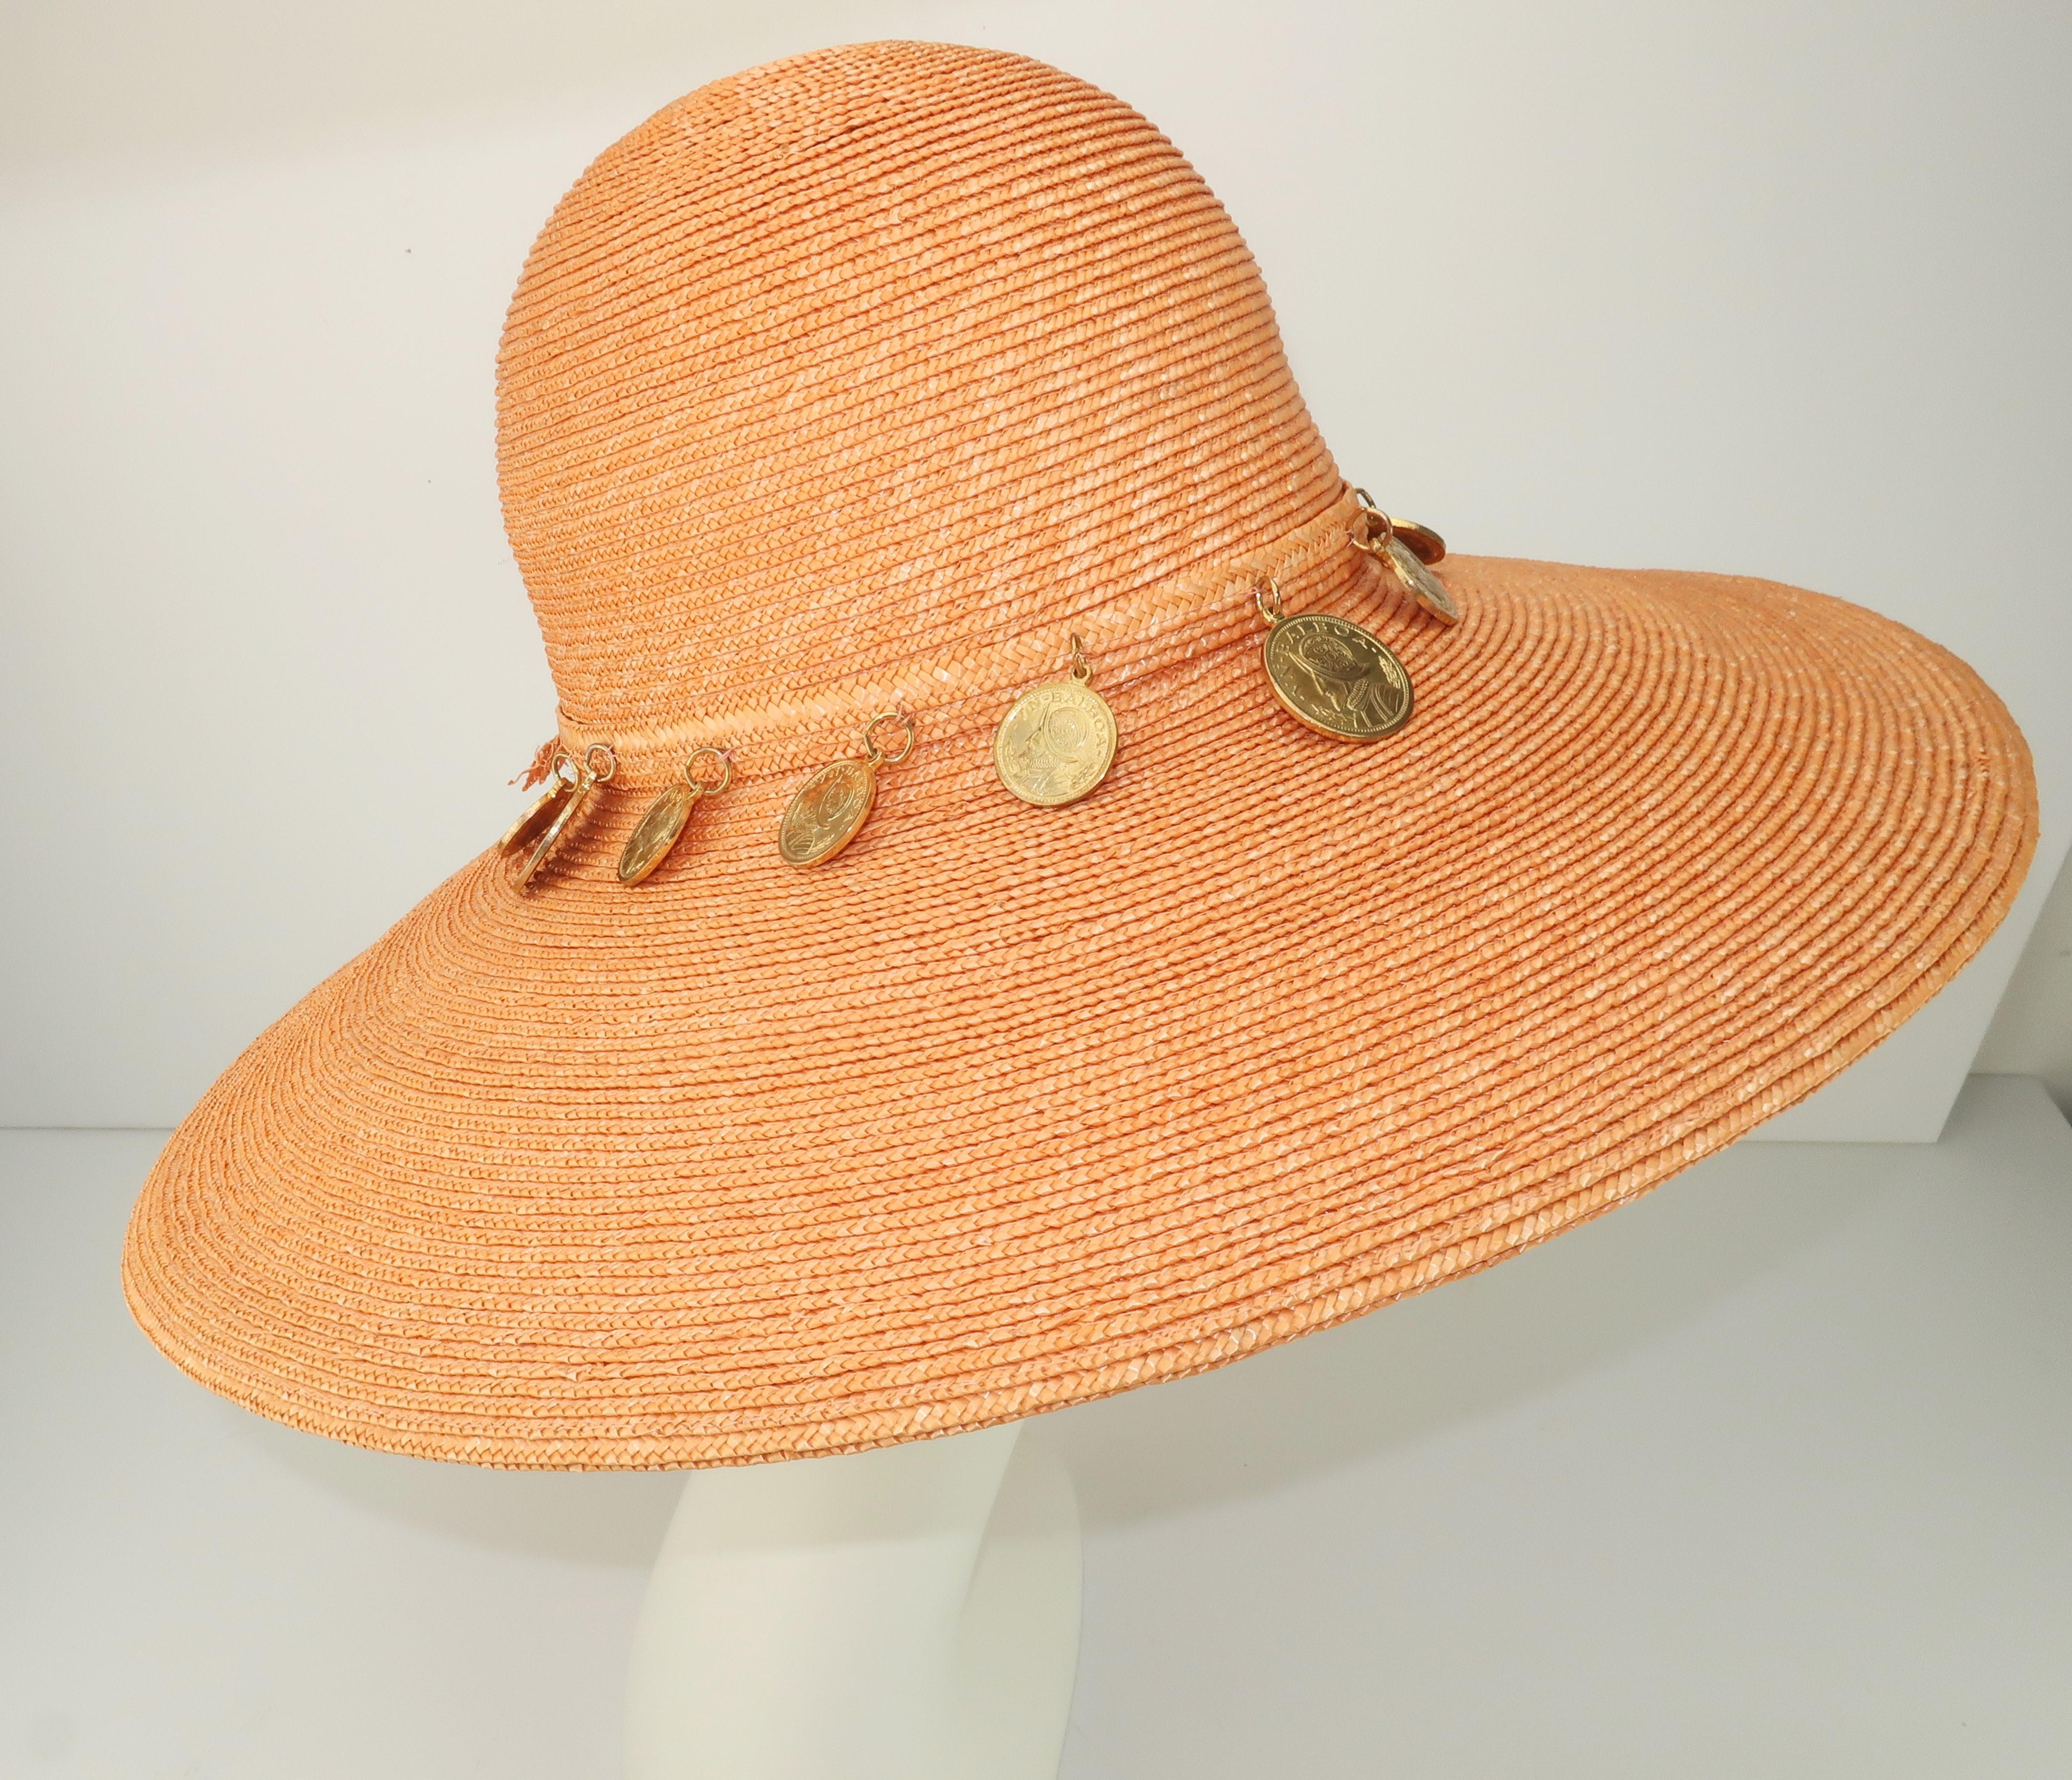 Vintage Wide Brim Straw Hat With Gold Coins 1